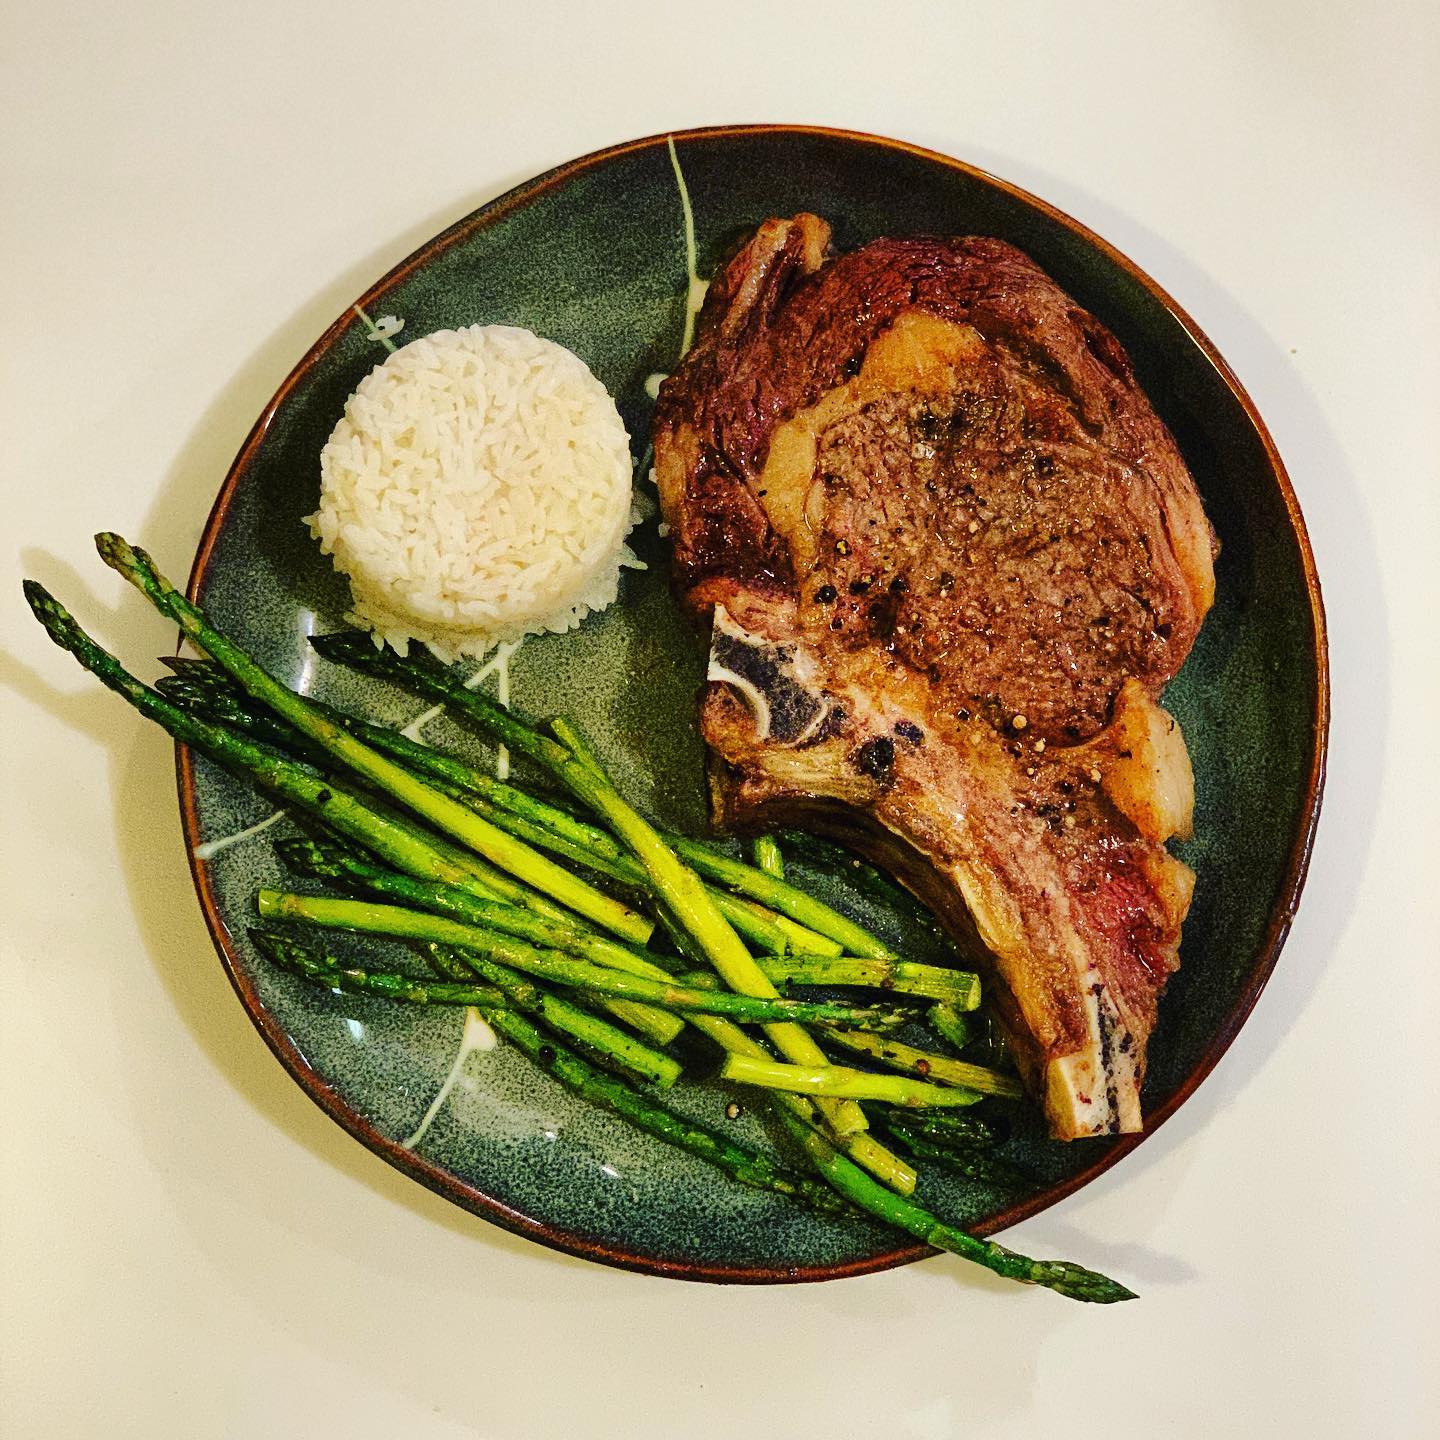 Steak is what’s for dinner.